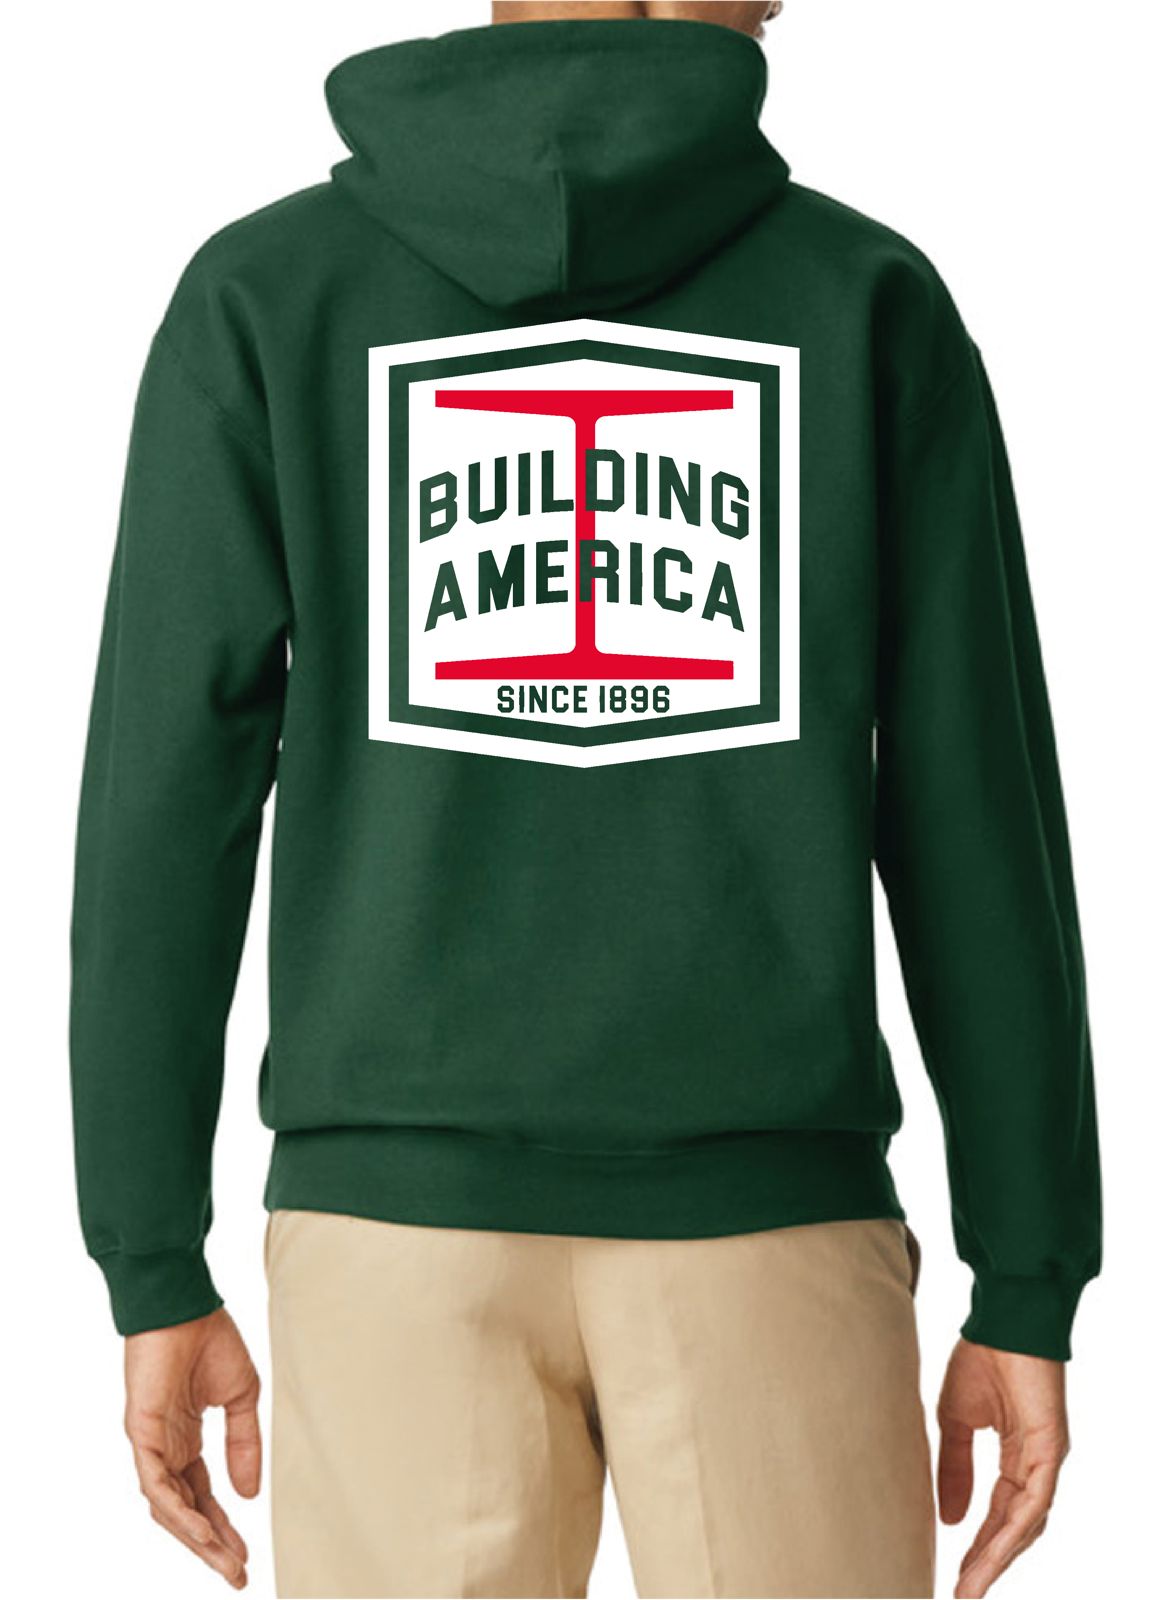 LIMITED EDITION Building America Steel - Green Hoodie